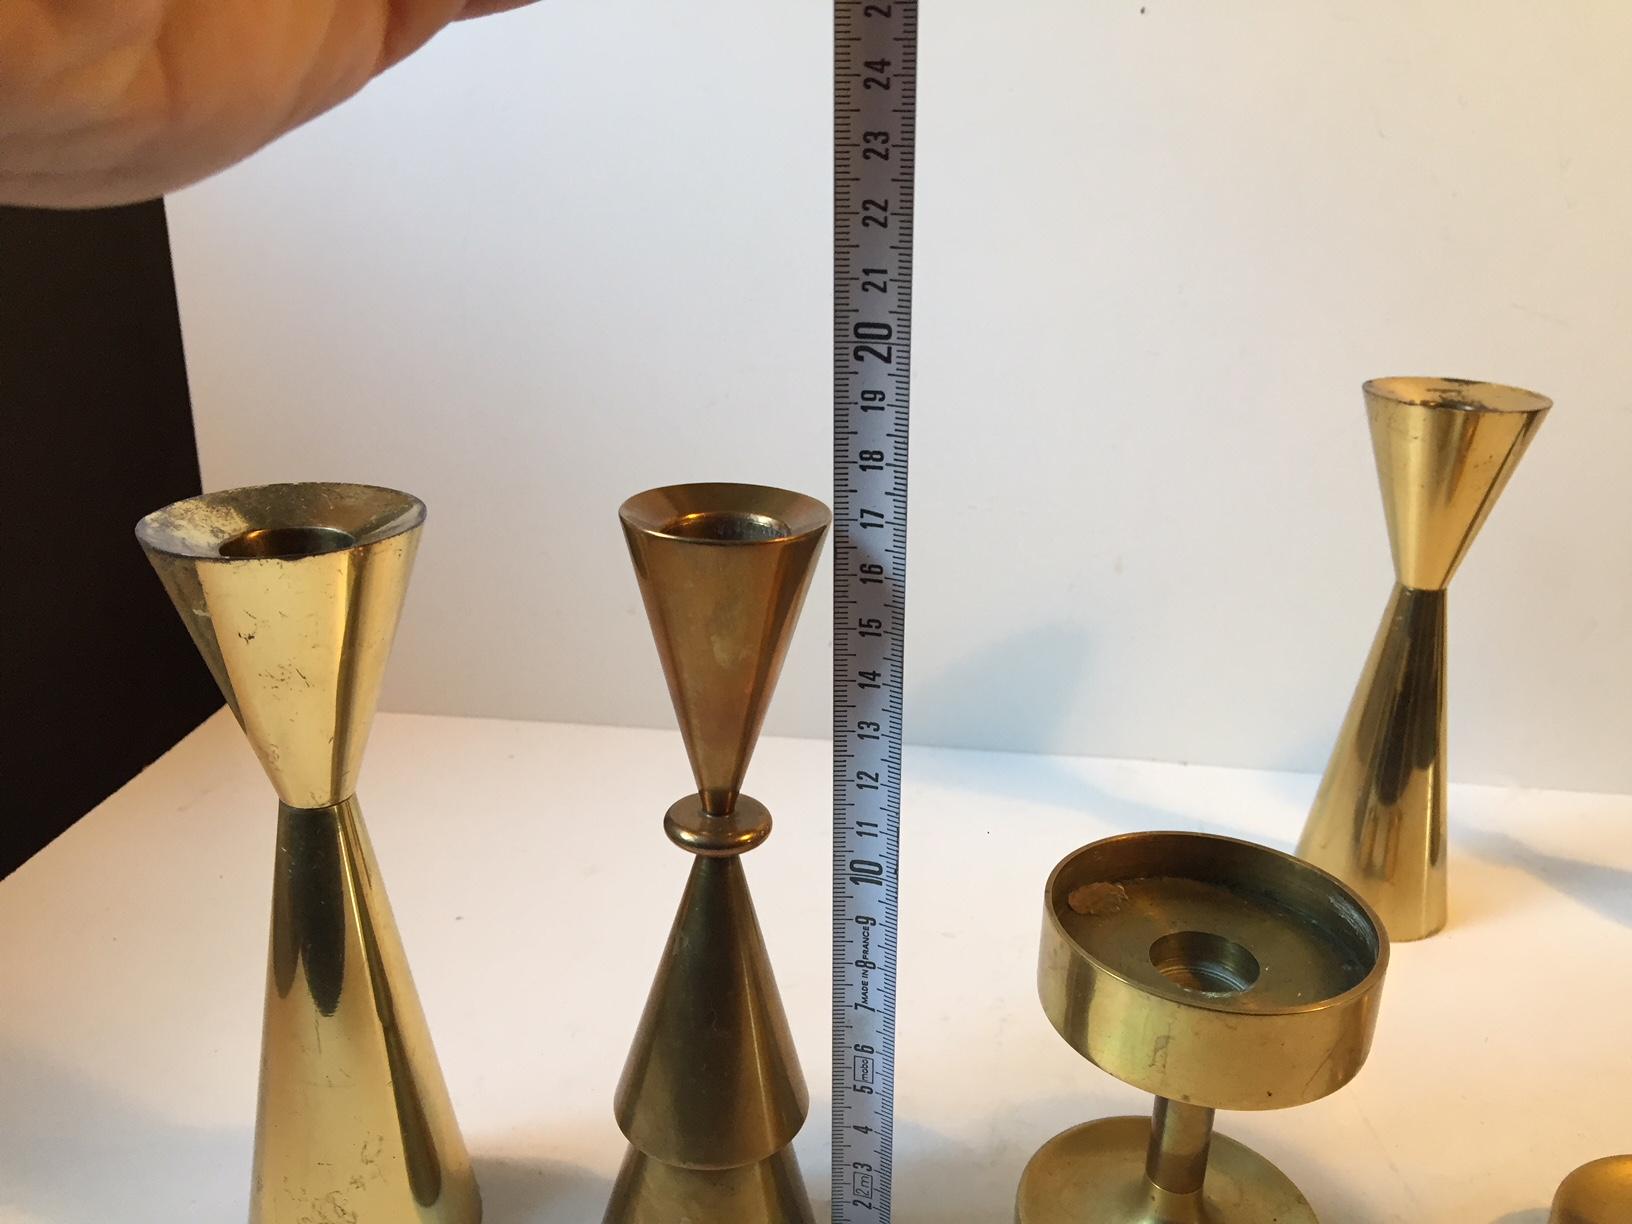 Late 20th Century Group of Scandinavian Modern Brass Candlesticks from the 1960s & 1970s